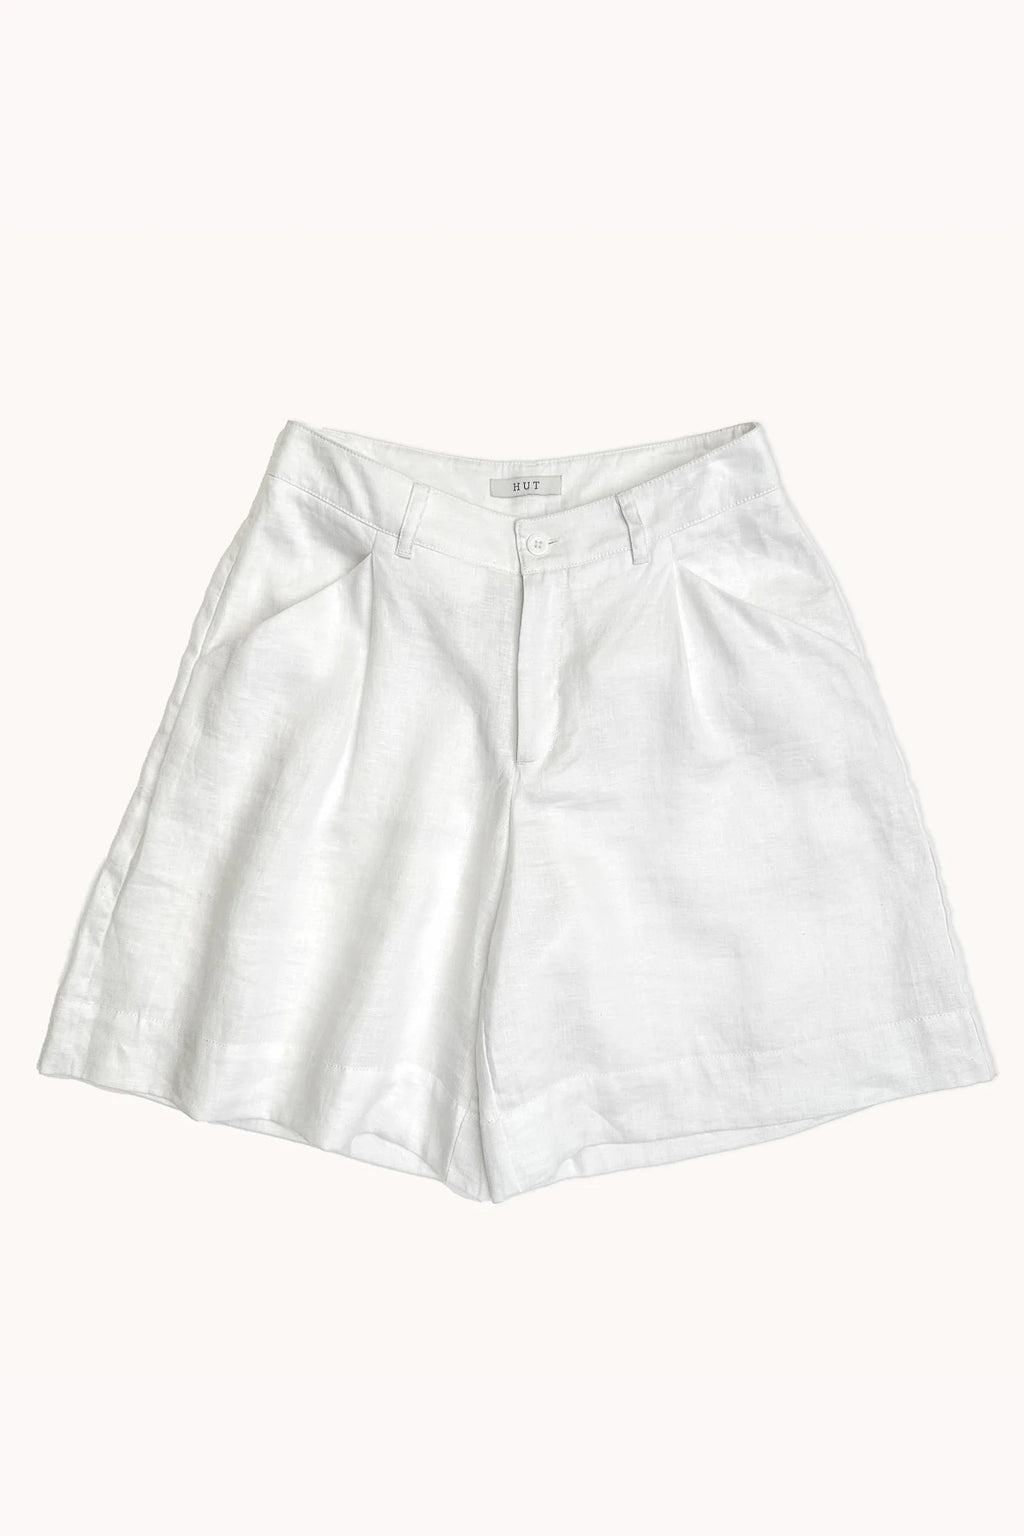 HUT -  Tailored Linen Shorts - White